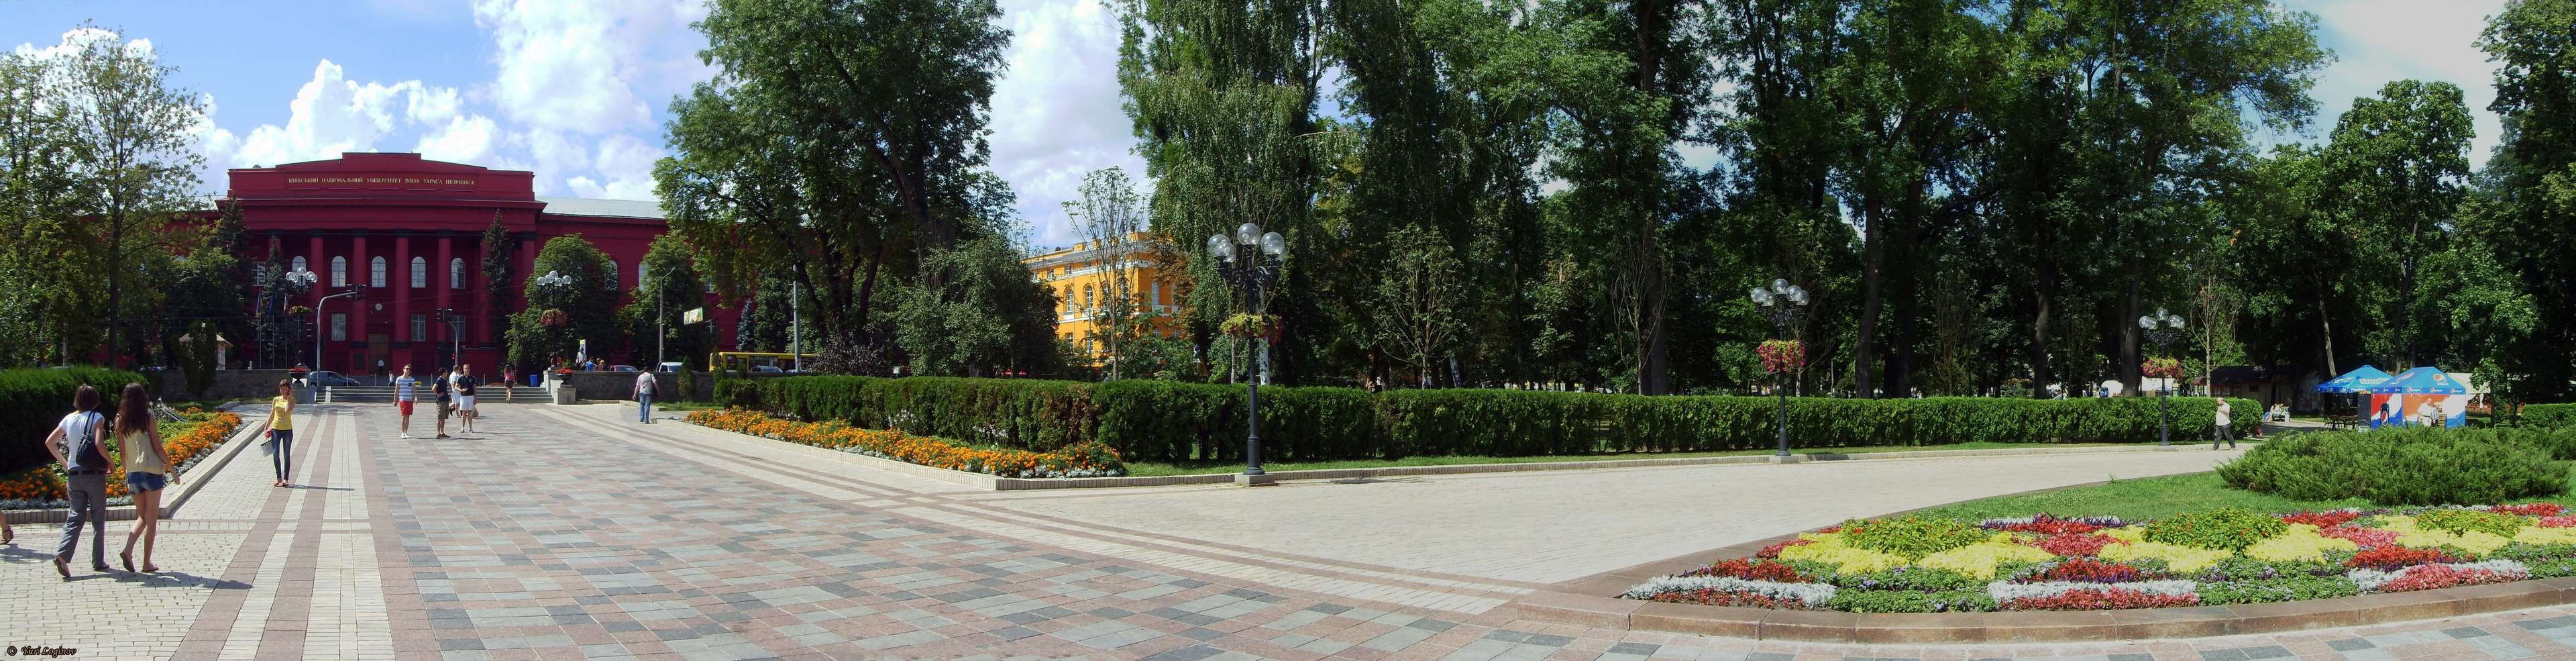 kiev, taras shevchenko national university of kyiv, taras shevchenko park